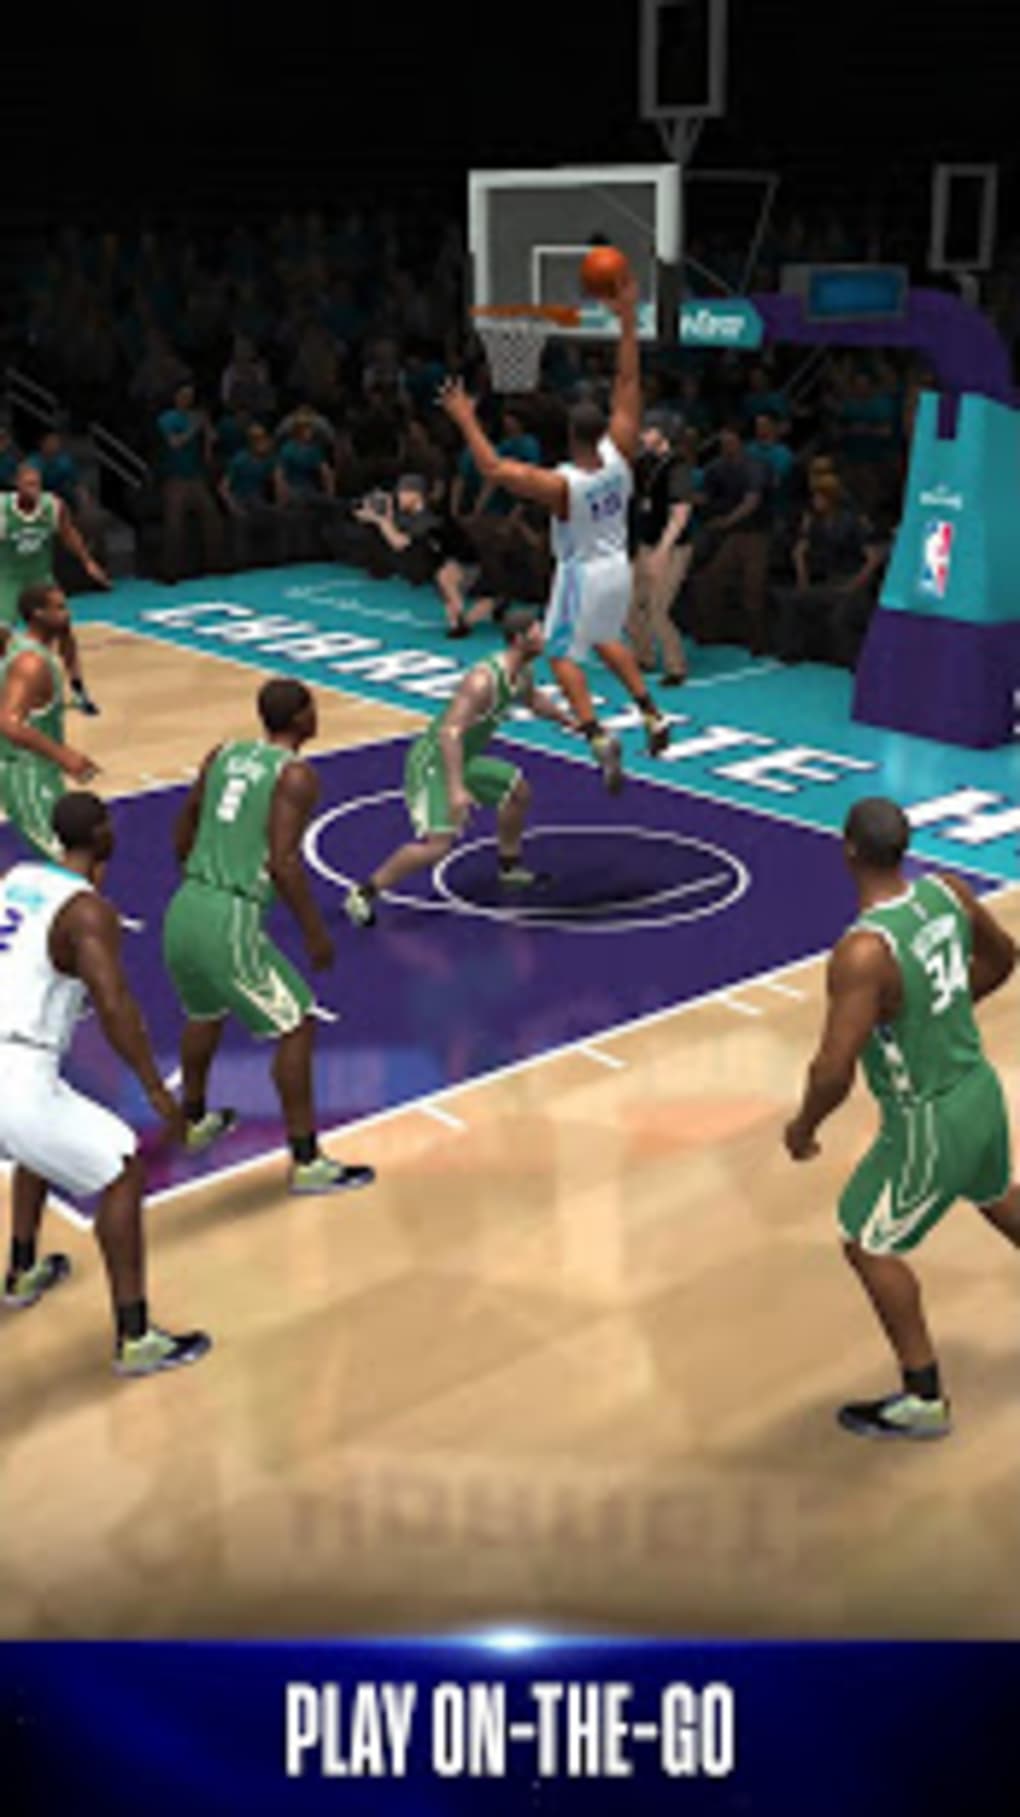 Watch NBA Basketball - Baixar APK para Android